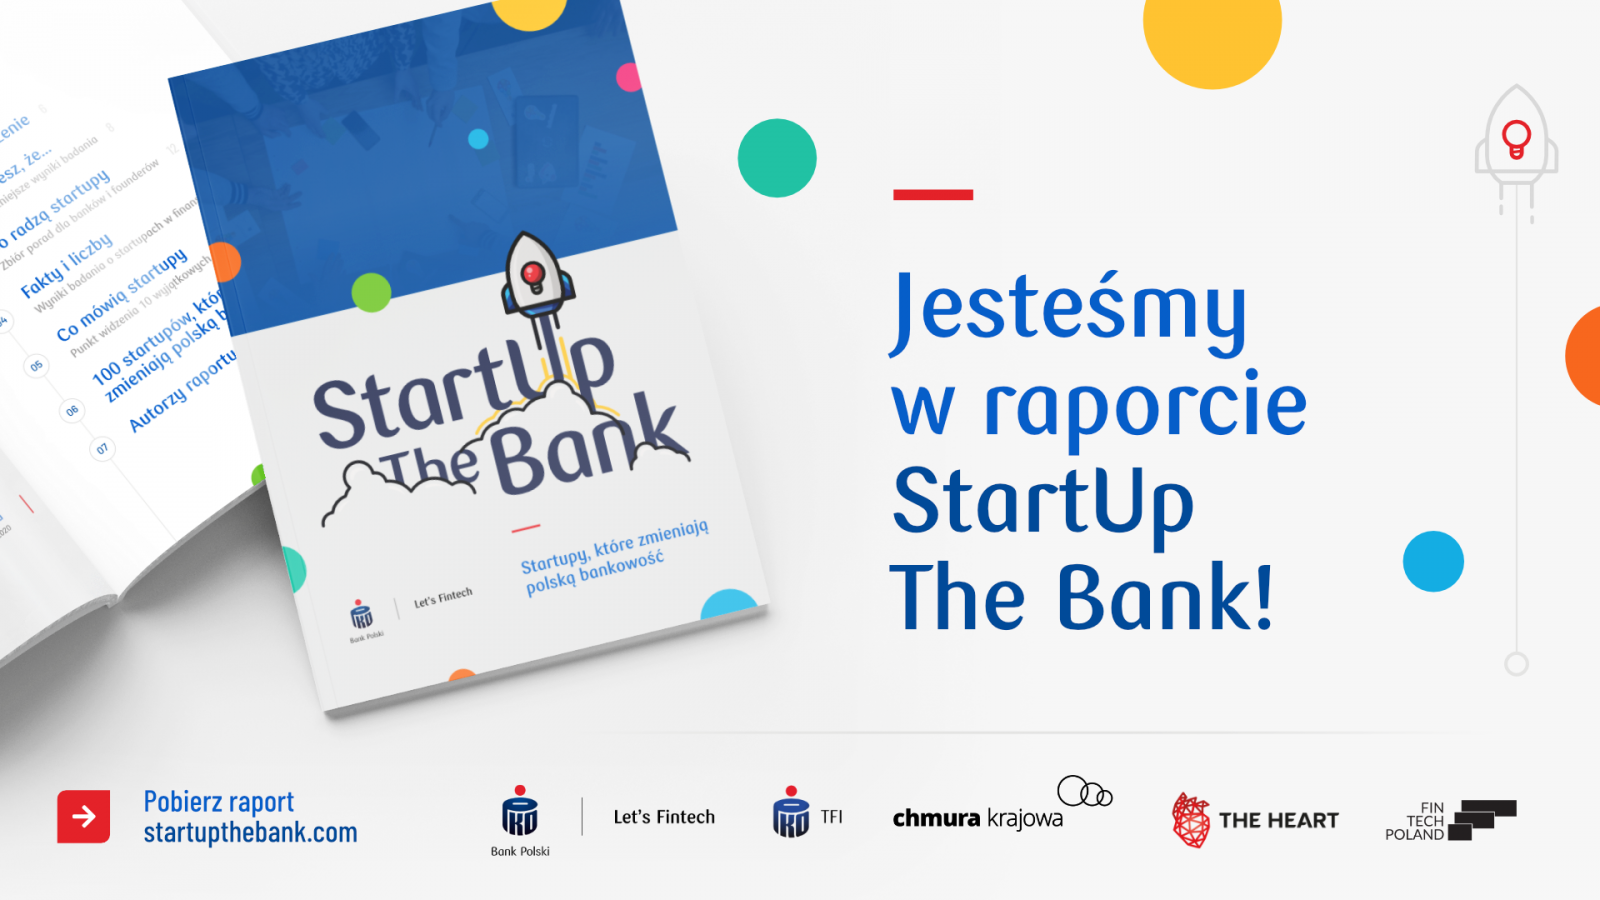 Startup The Bank Lets fintech, PKO Raport 